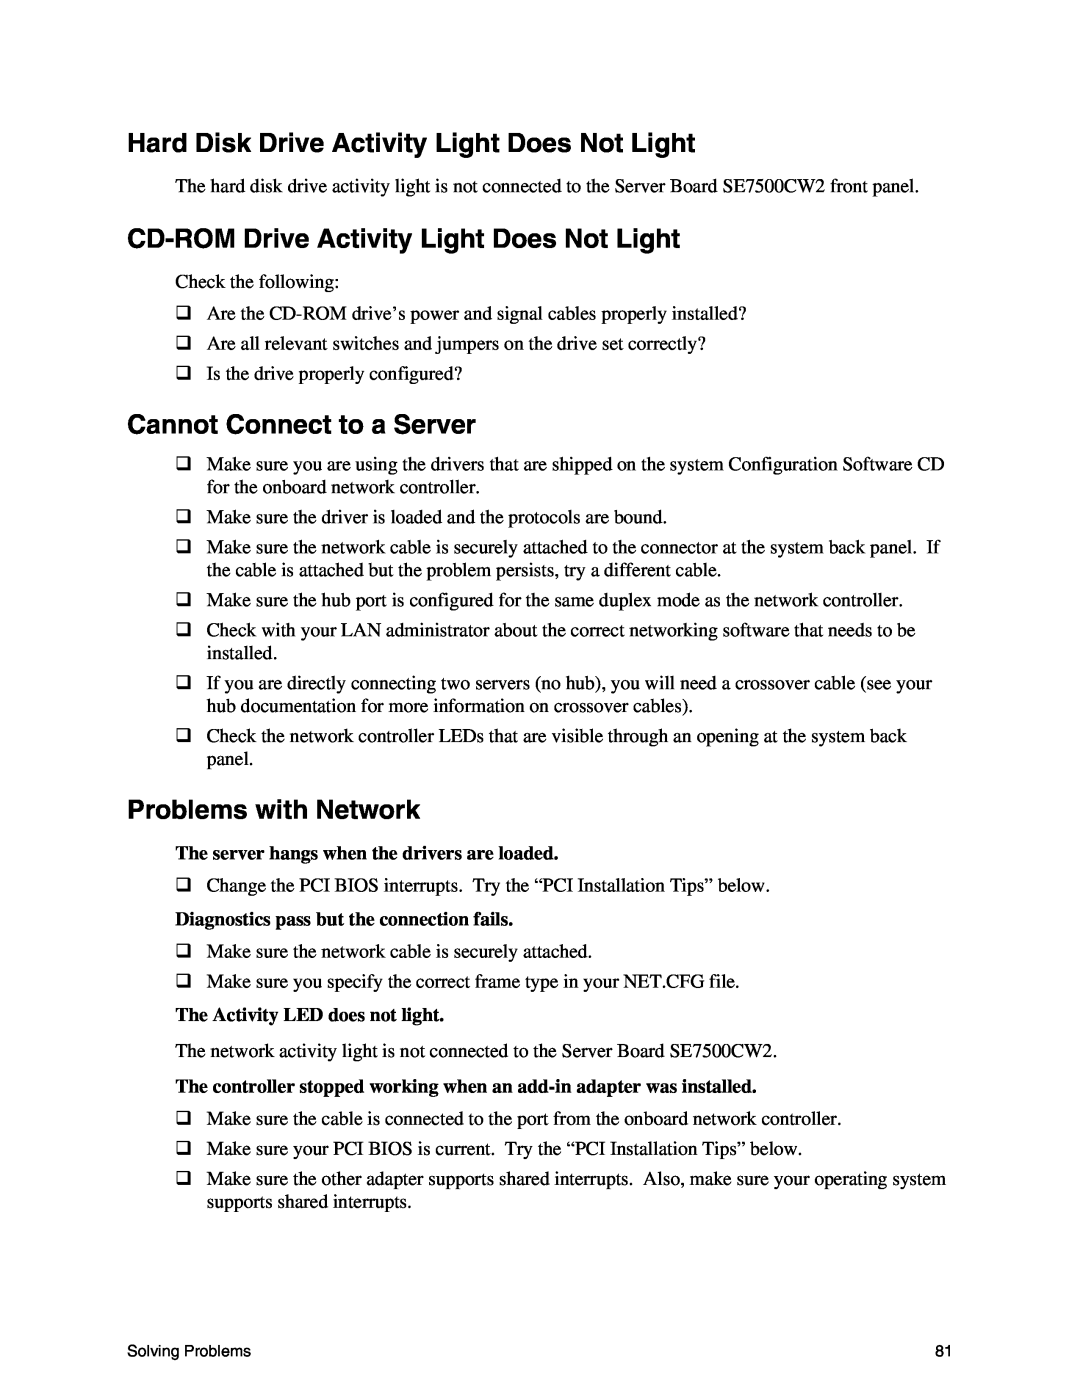 Intel SE7500CW2 manual Hard Disk Drive Activity Light Does Not Light, CD-ROMDrive Activity Light Does Not Light 